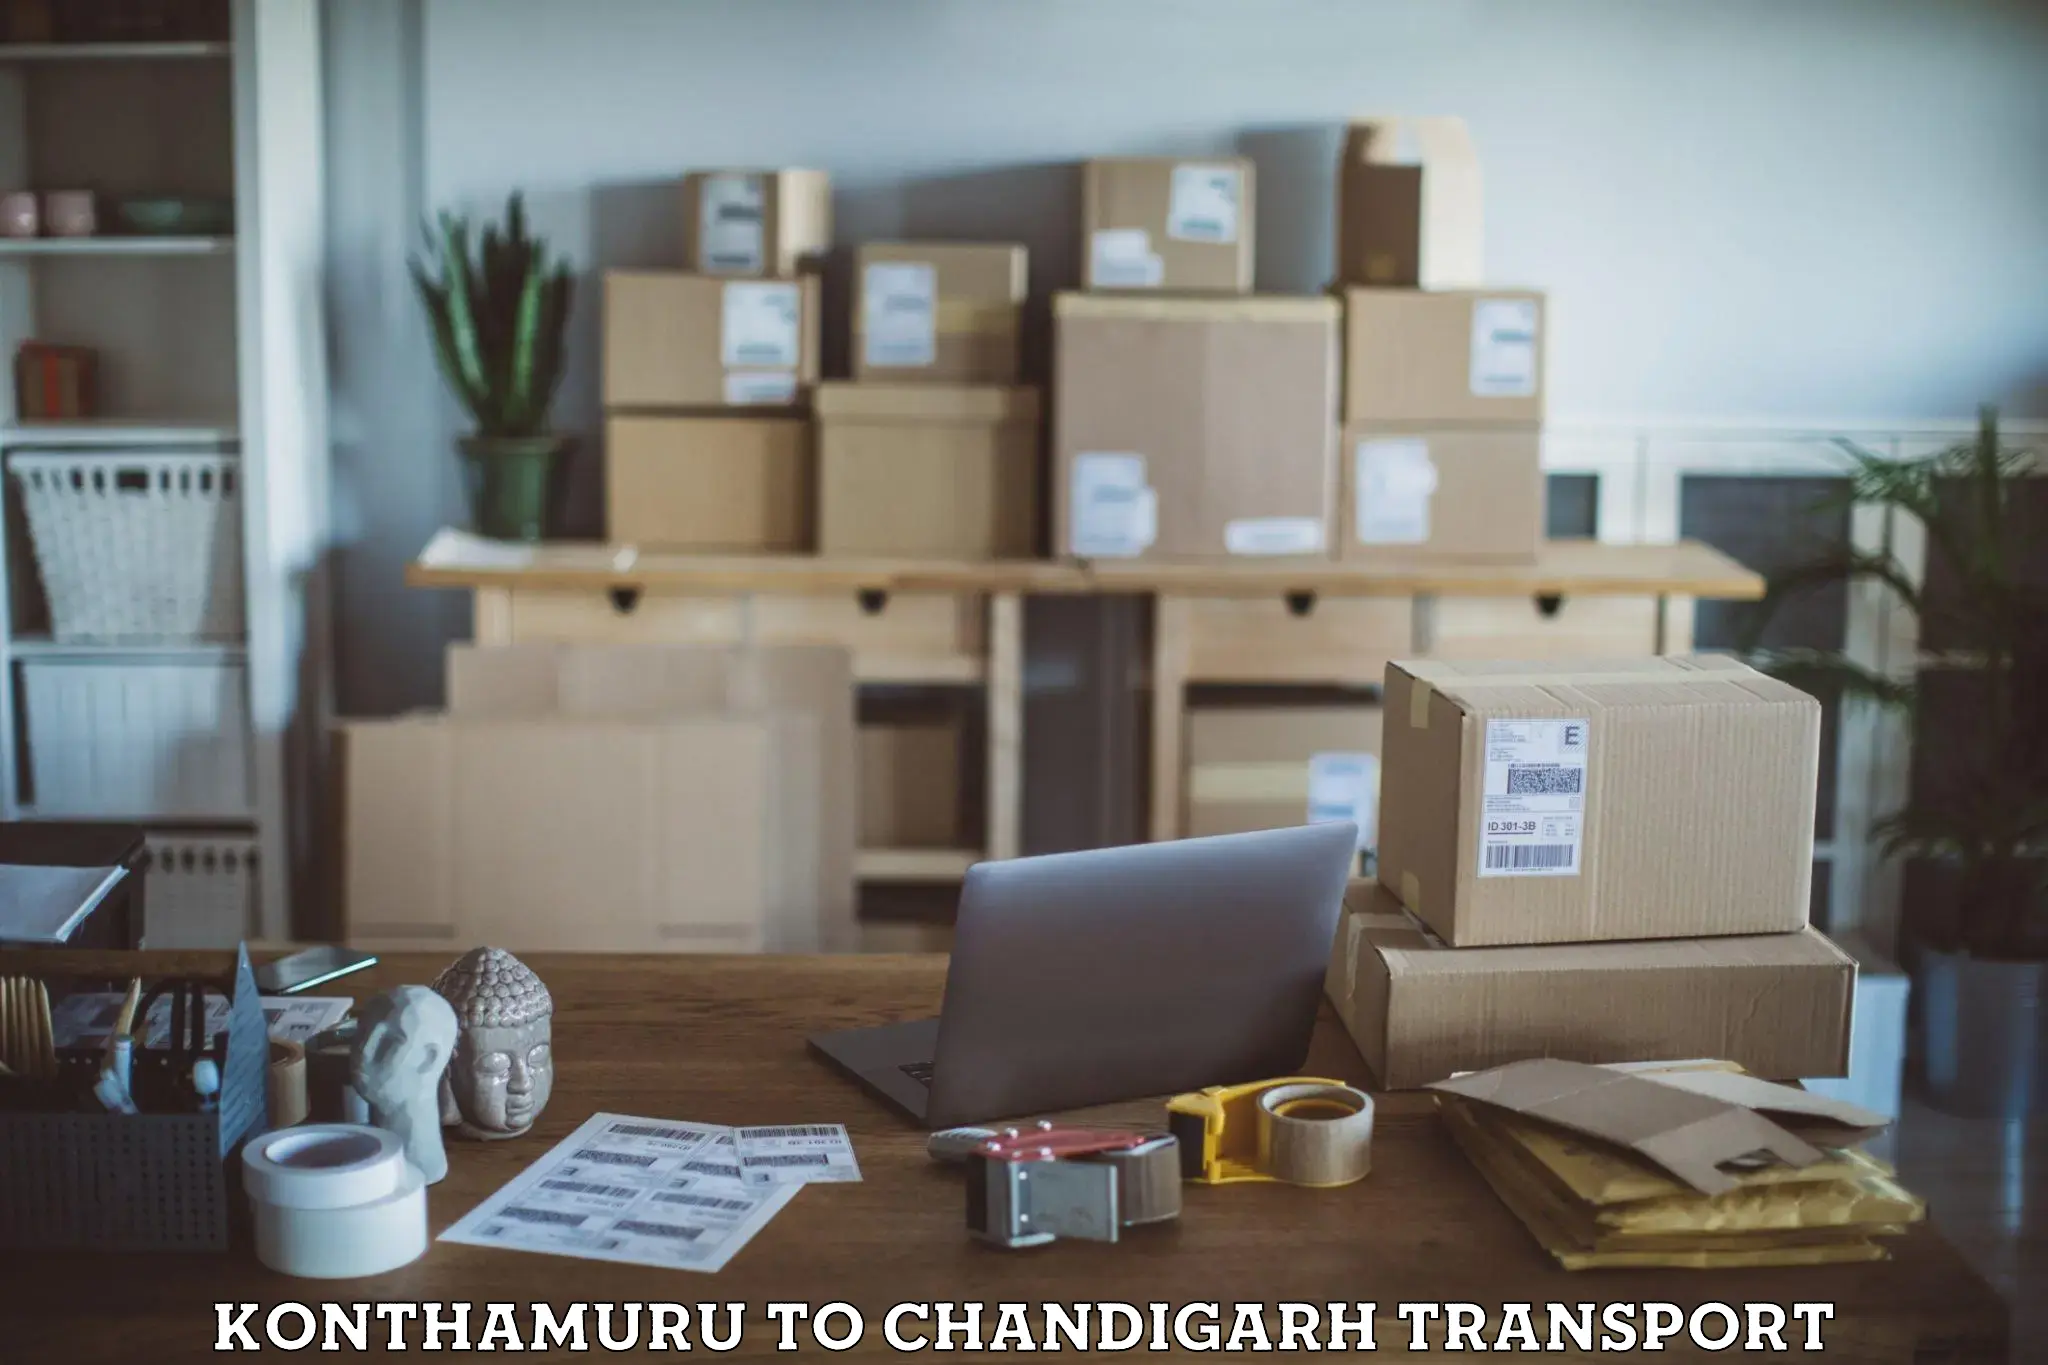 Daily parcel service transport Konthamuru to Chandigarh